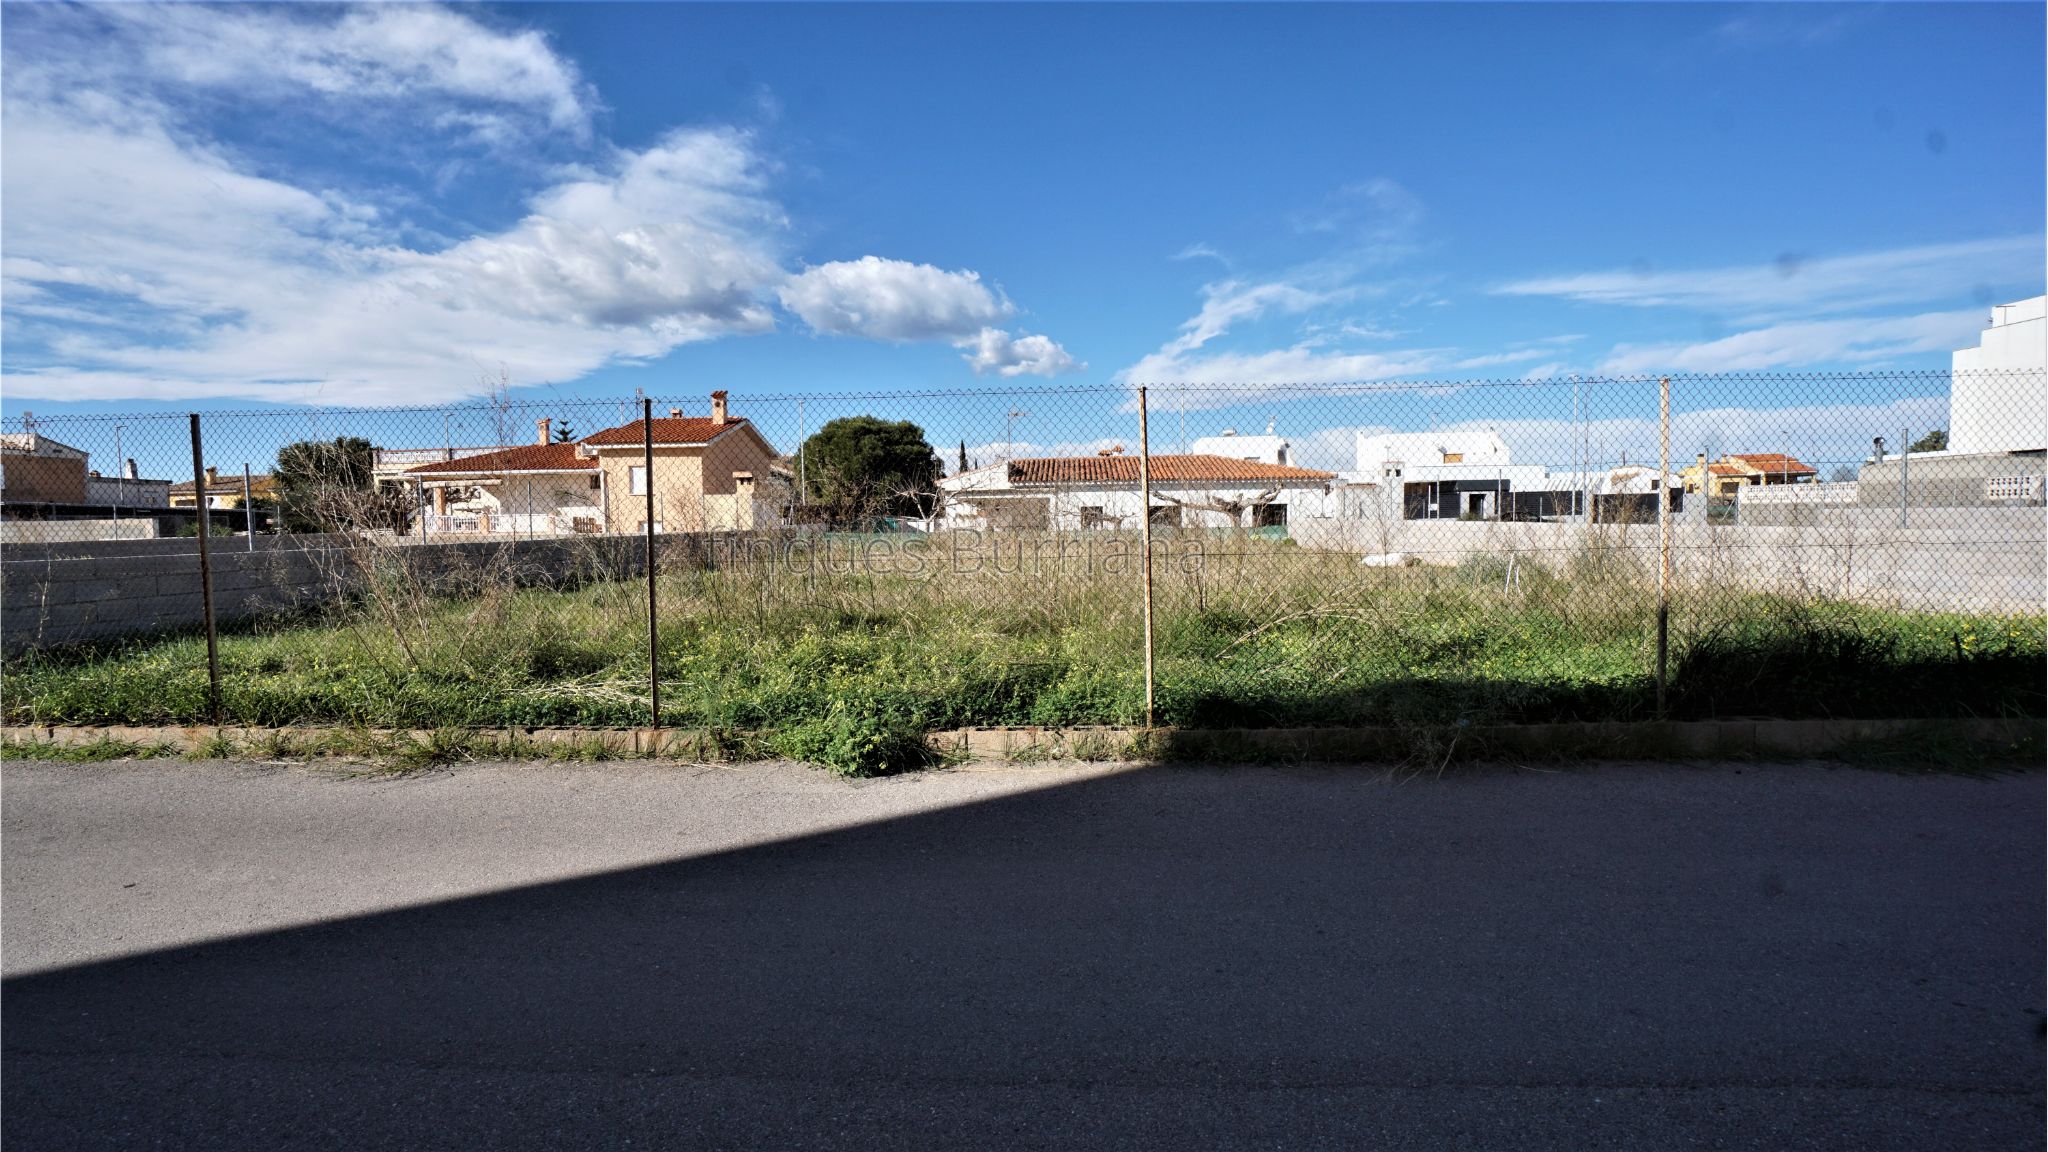 Parcela unifamiliar aislada en venta en Burriana (Castellón) en zona Serratella 